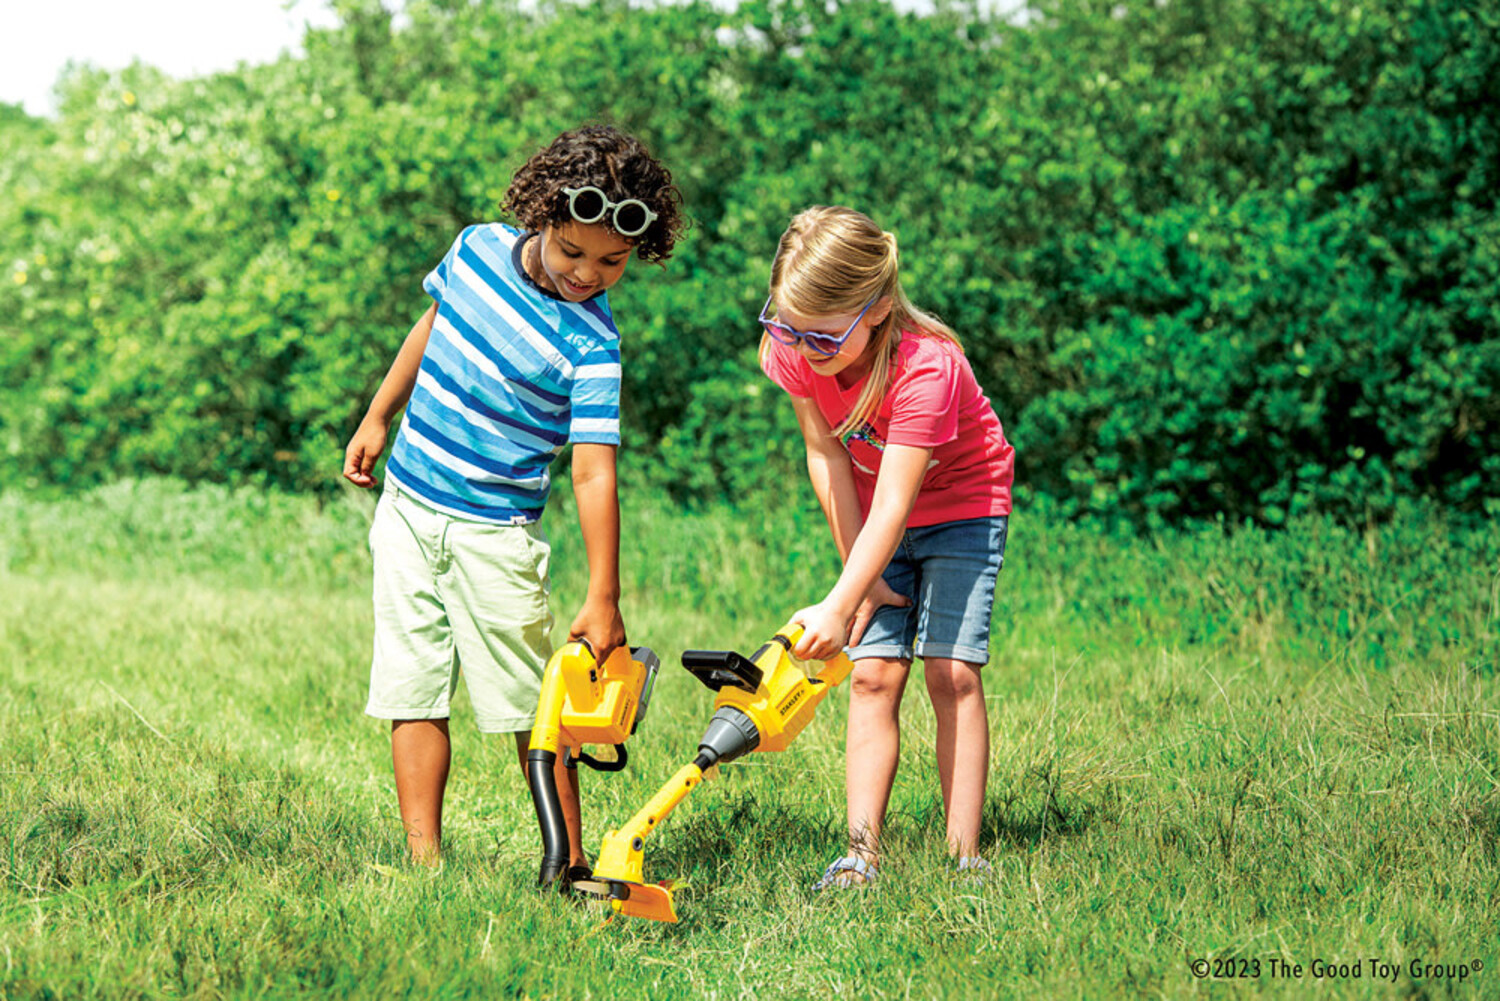 Jr. Grass Trimmer Kids Yard Play Tools